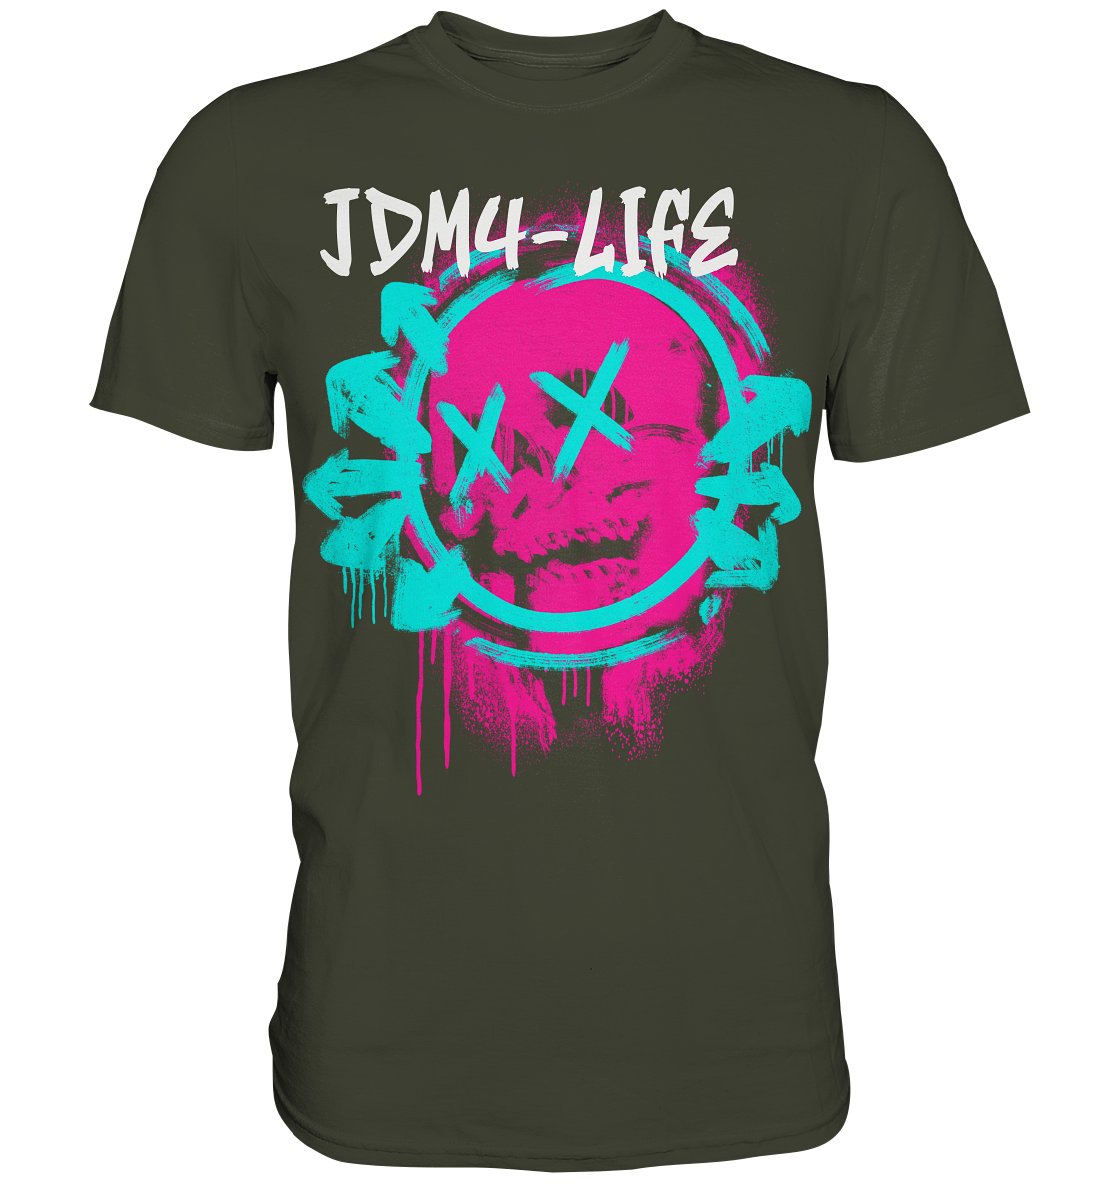 JDM4-LIFE Graffiti - Premium Shirt